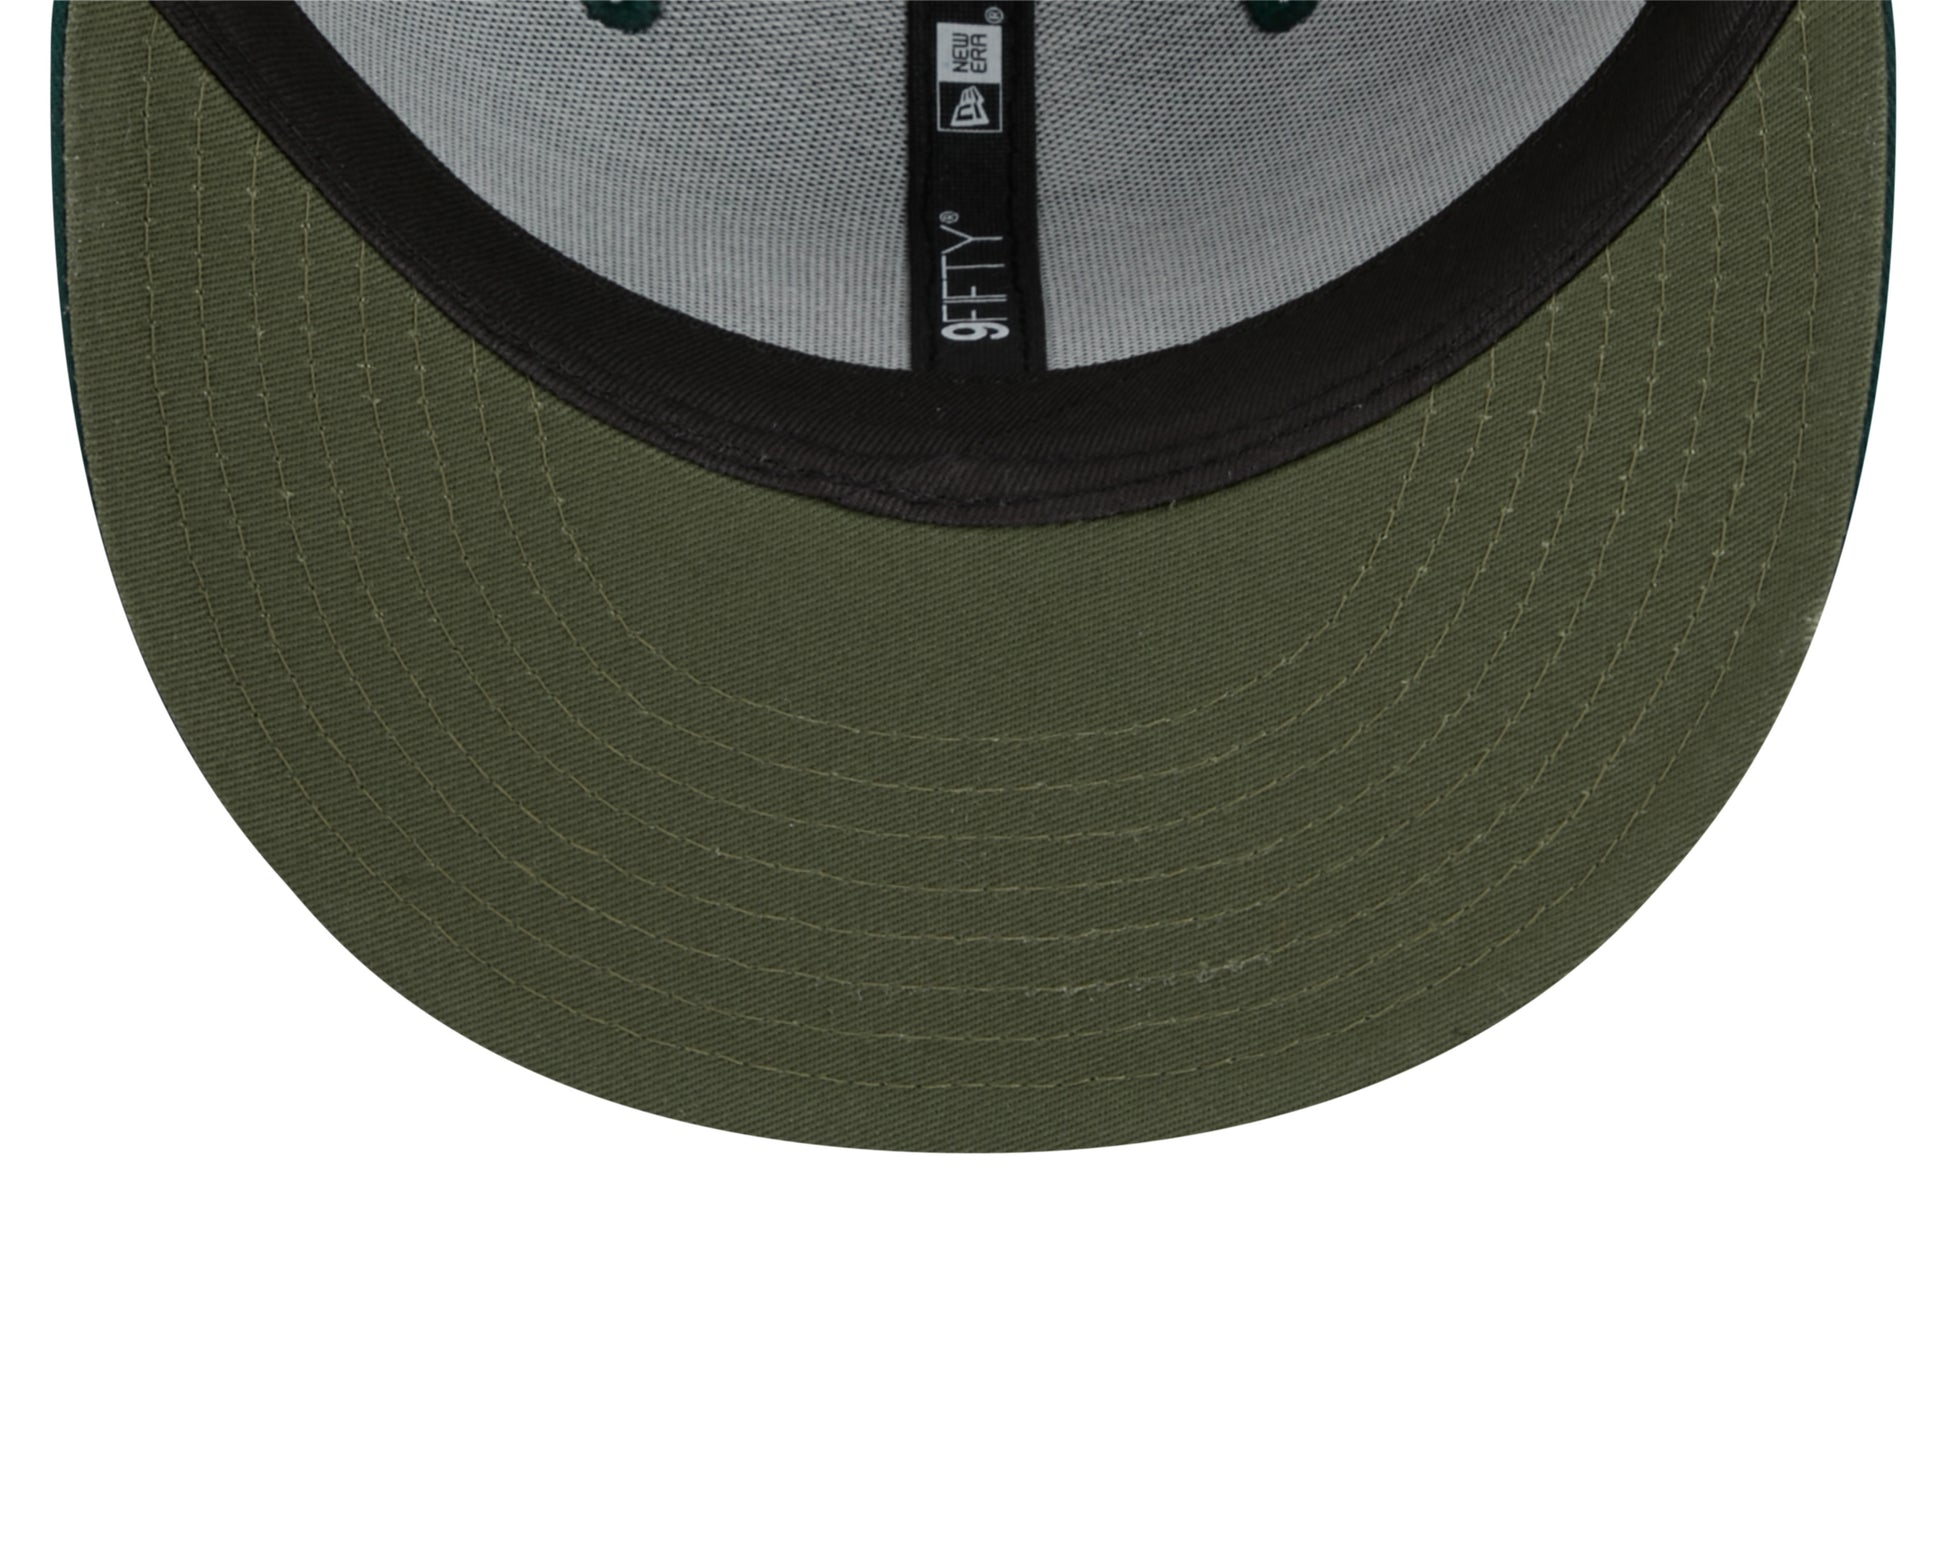 New Era - Oakland Athletics - Side Patch Script -  9Fifty Snapback - Dark Green - Headz Up 